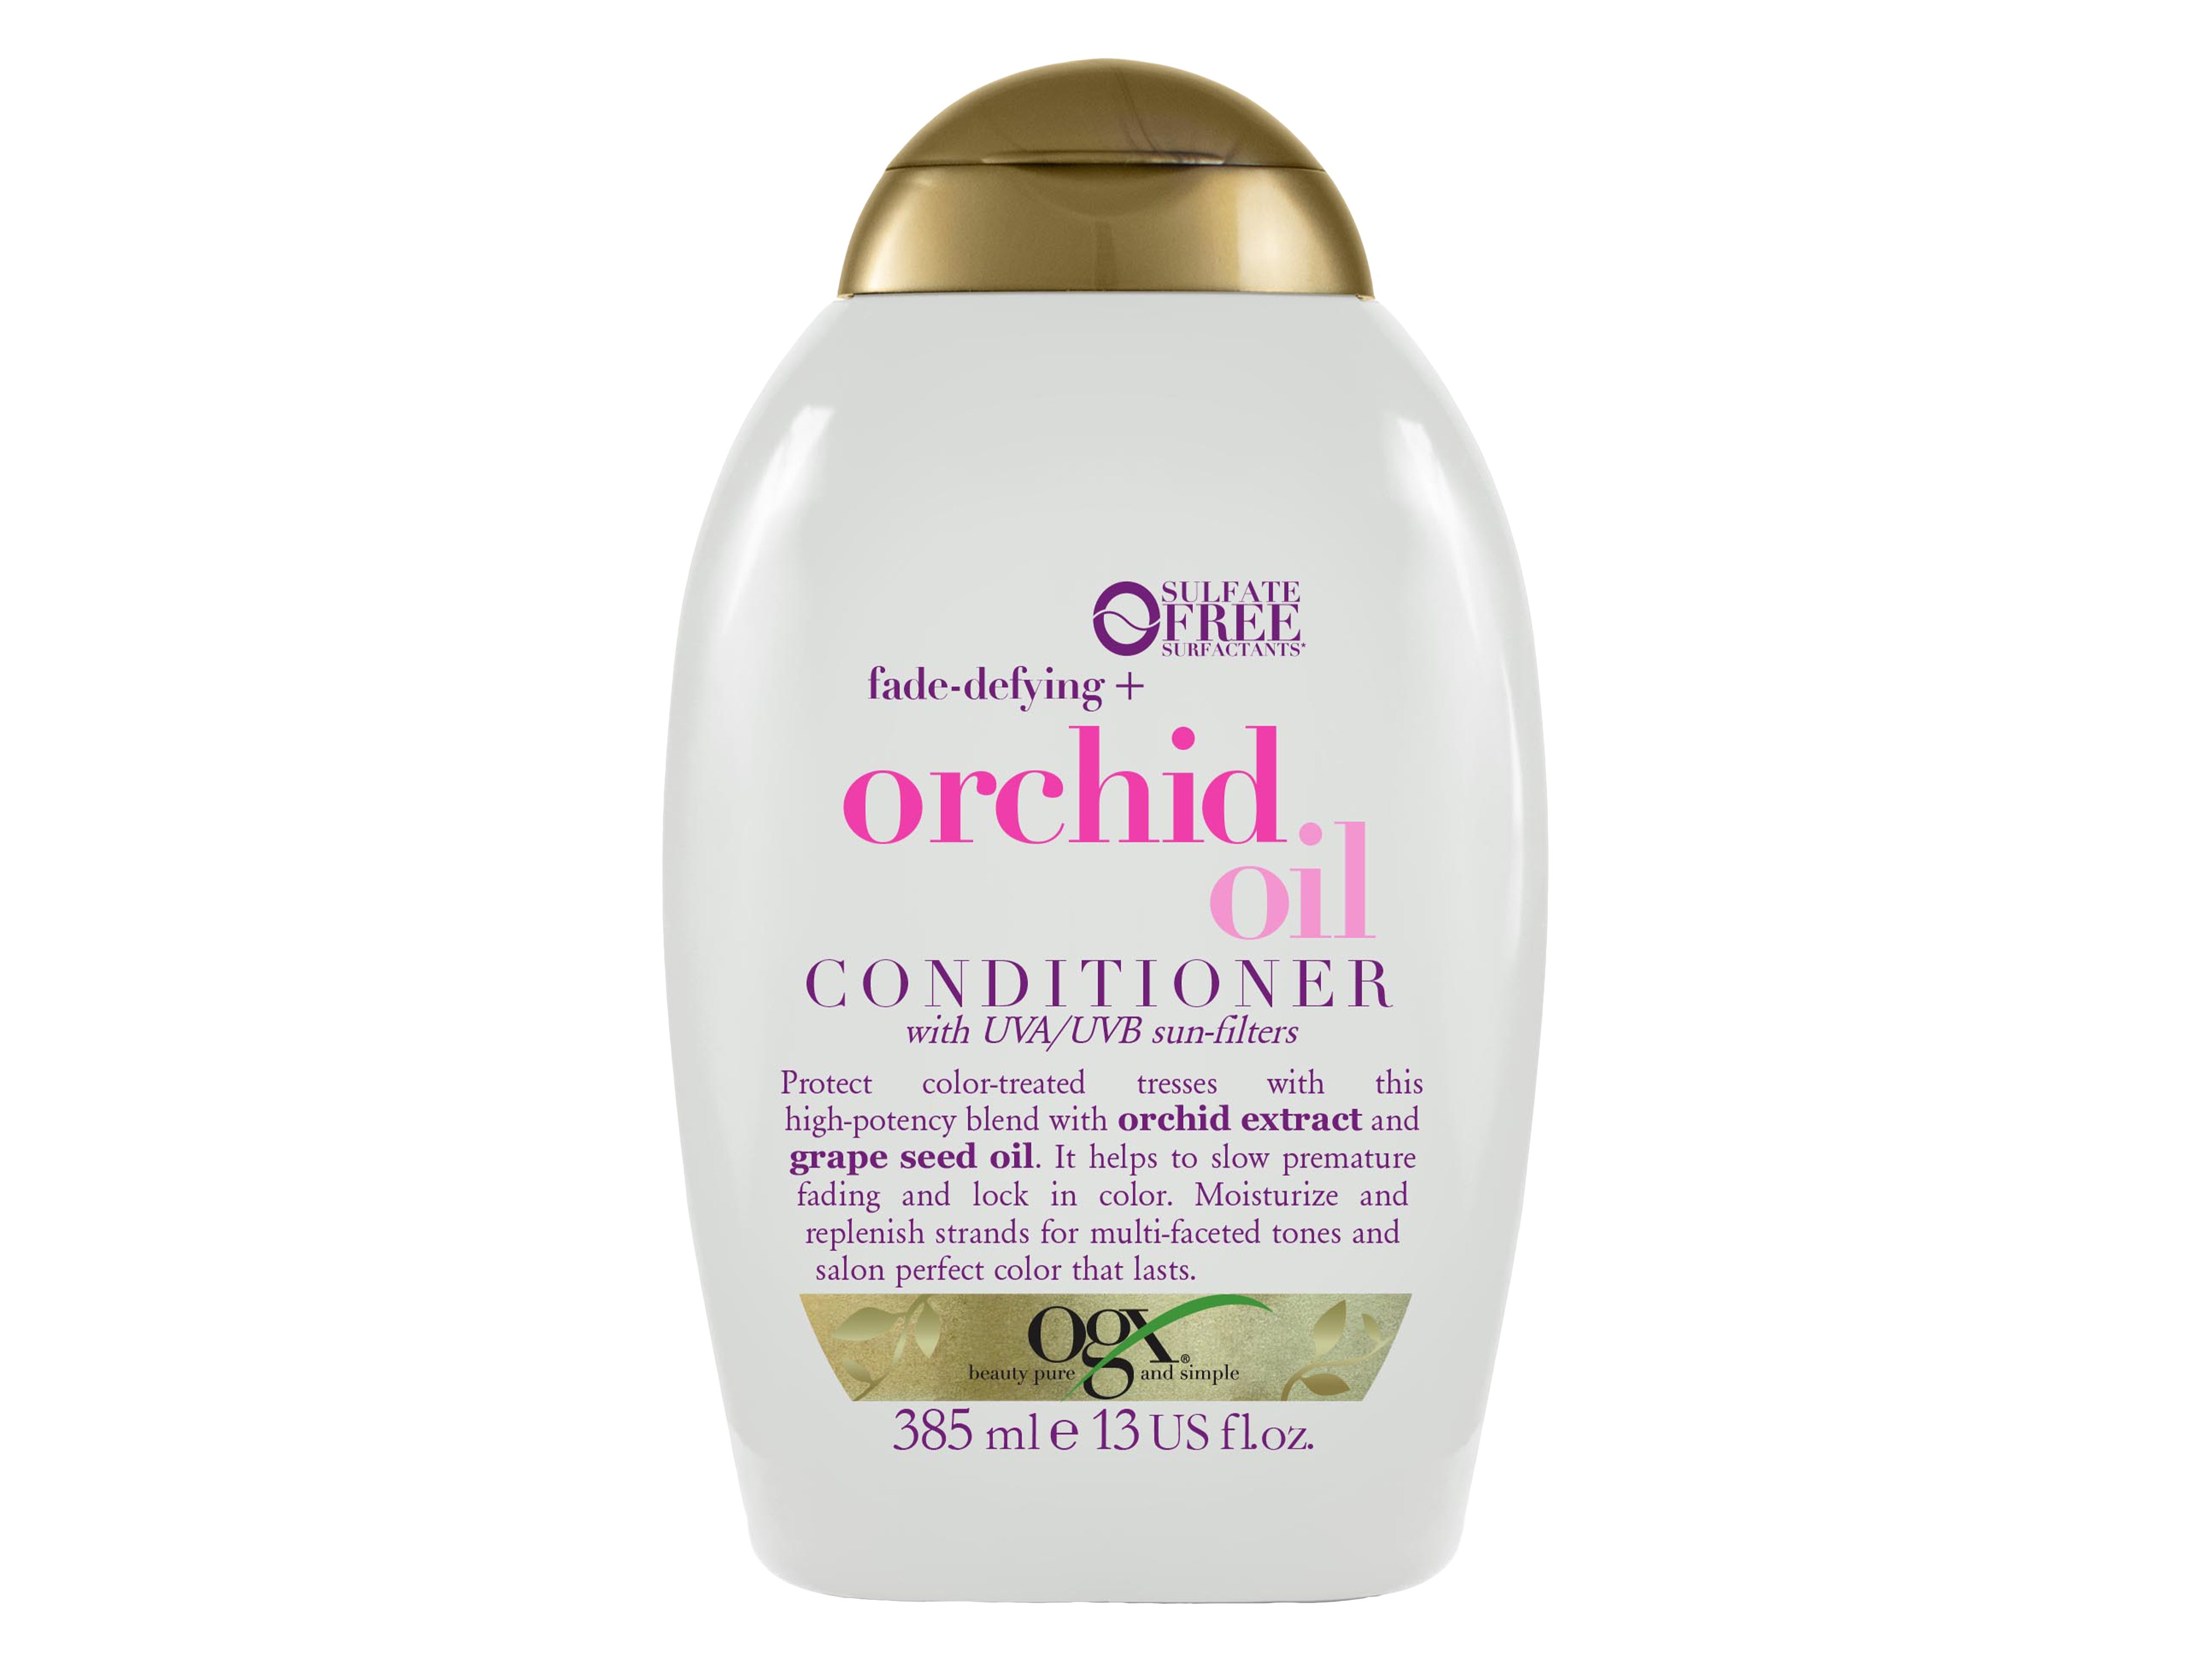 Ogx Ogx Orchid balsam 385 ml, 385